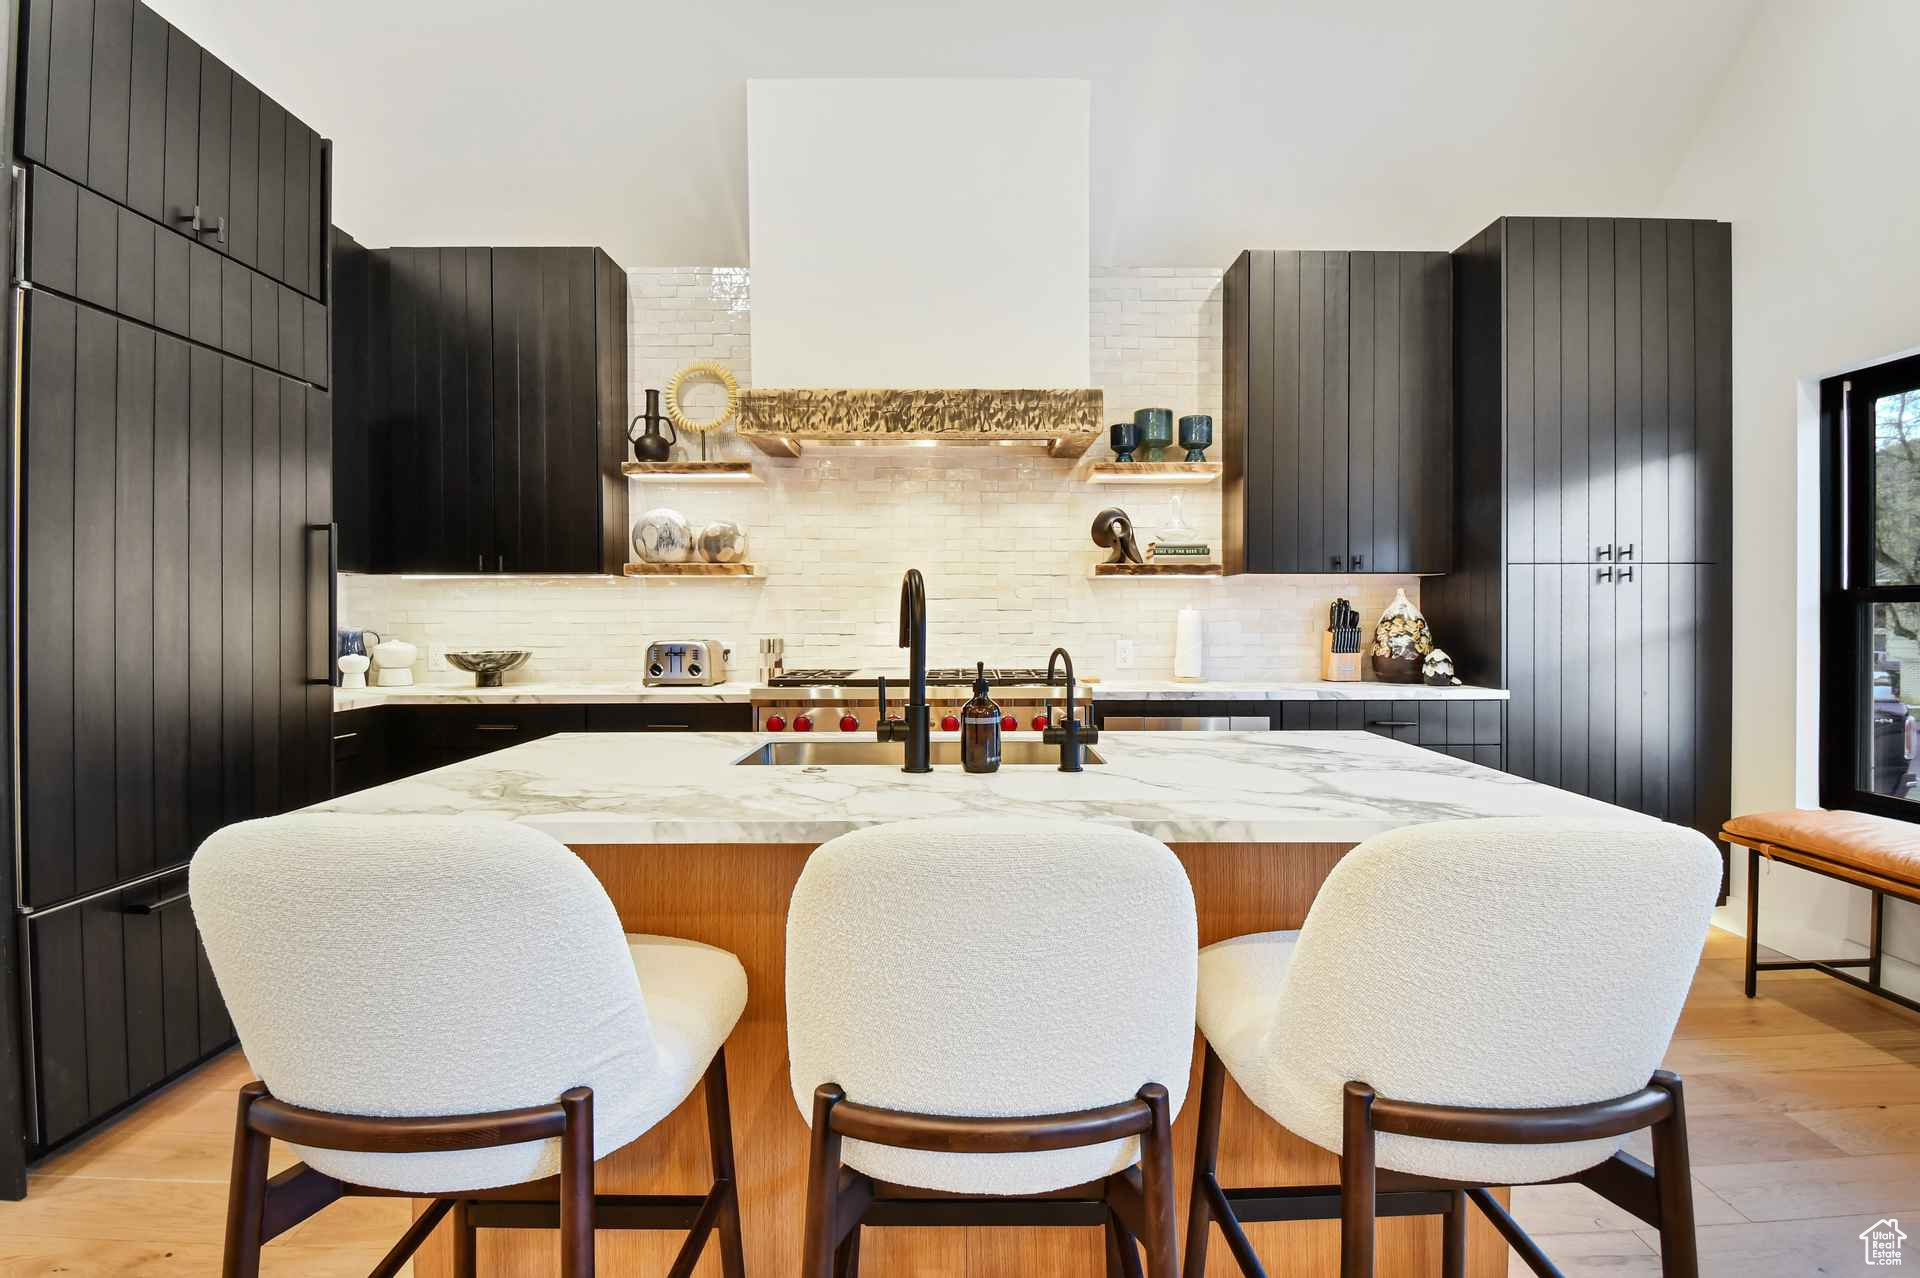 Kitchen featuring a breakfast bar area, light hardwood / wood-style flooring, tasteful backsplash, and sink